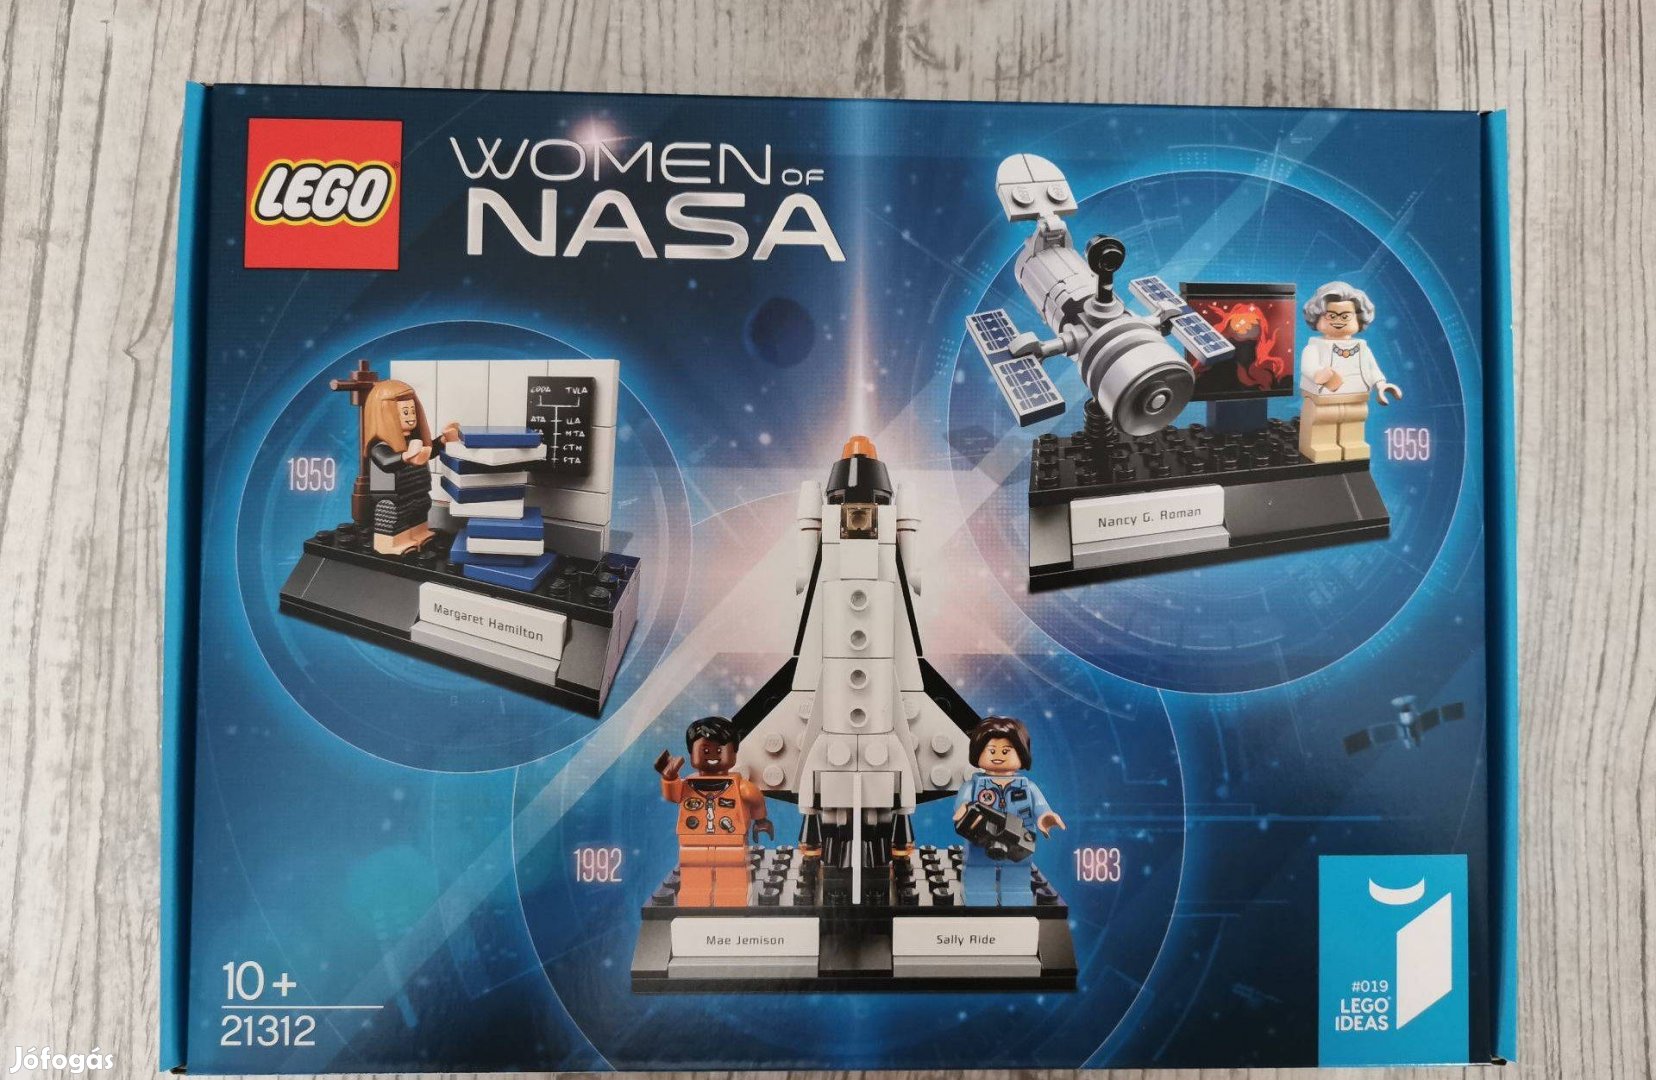 LEGO Ideas - Women of NASA 21312